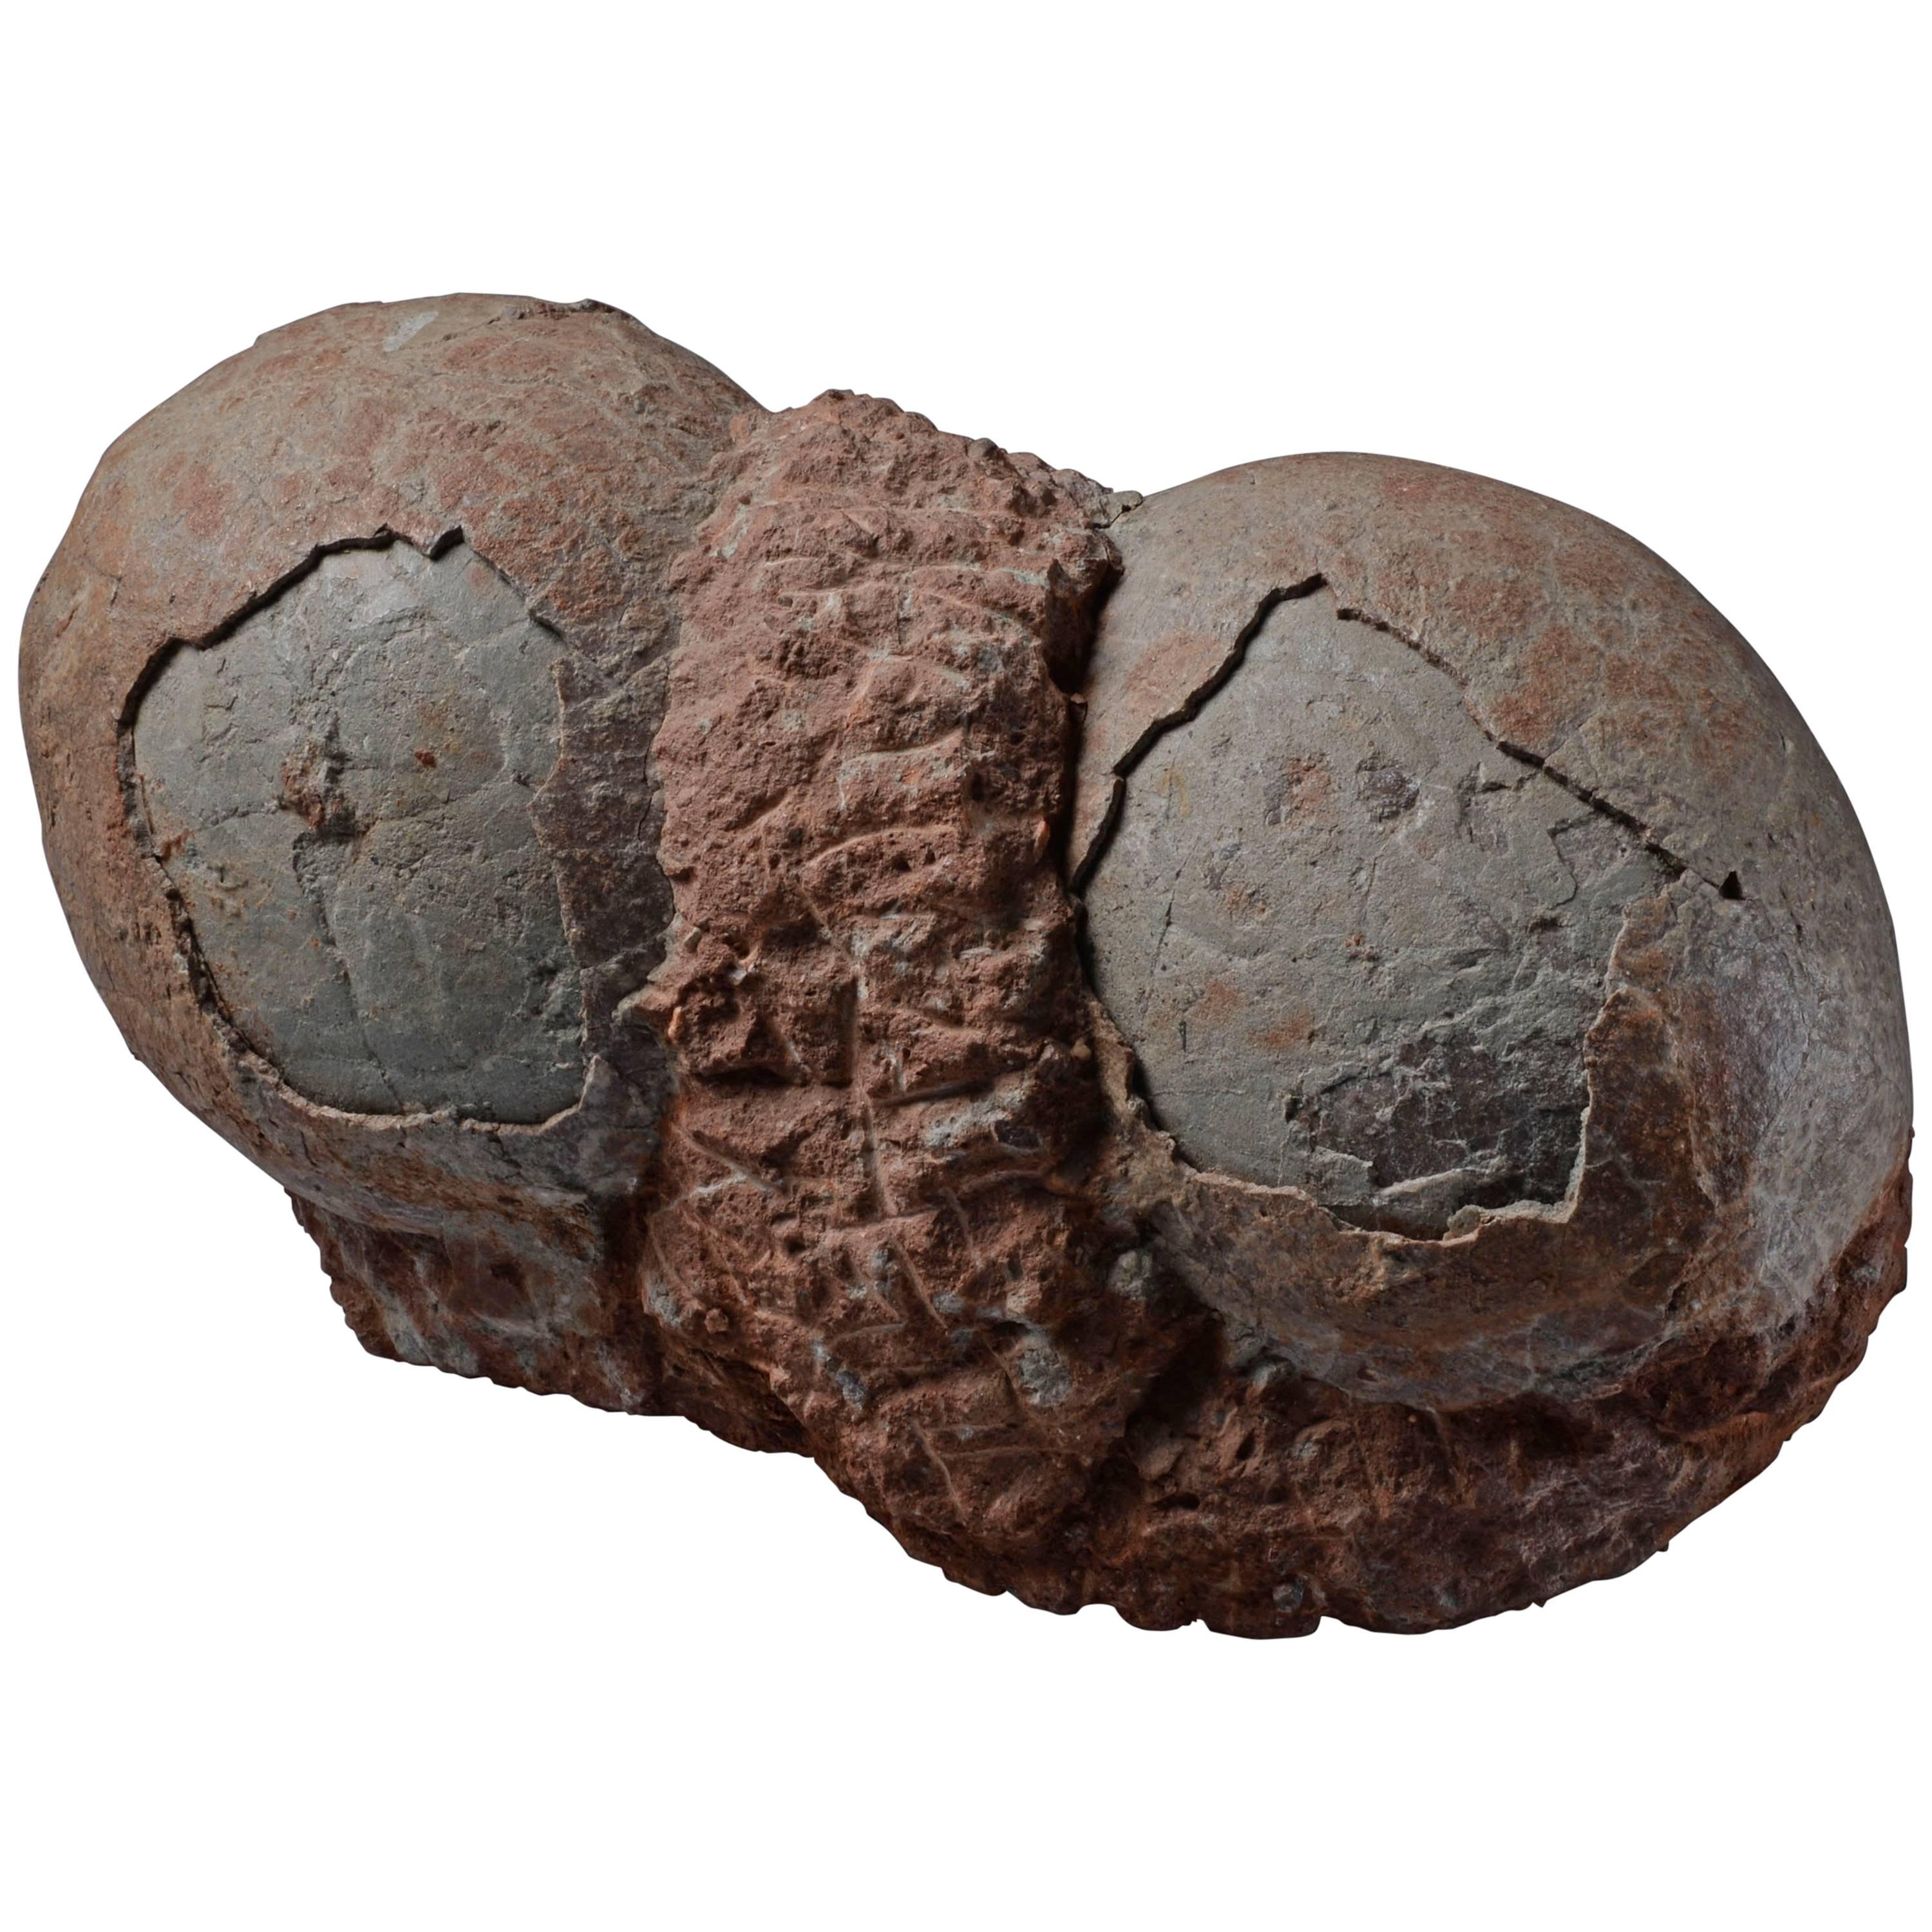 Prehistoric Fossilized Hadrosaur Dinosaur Egg Nest Fossil, Cretaceous Period